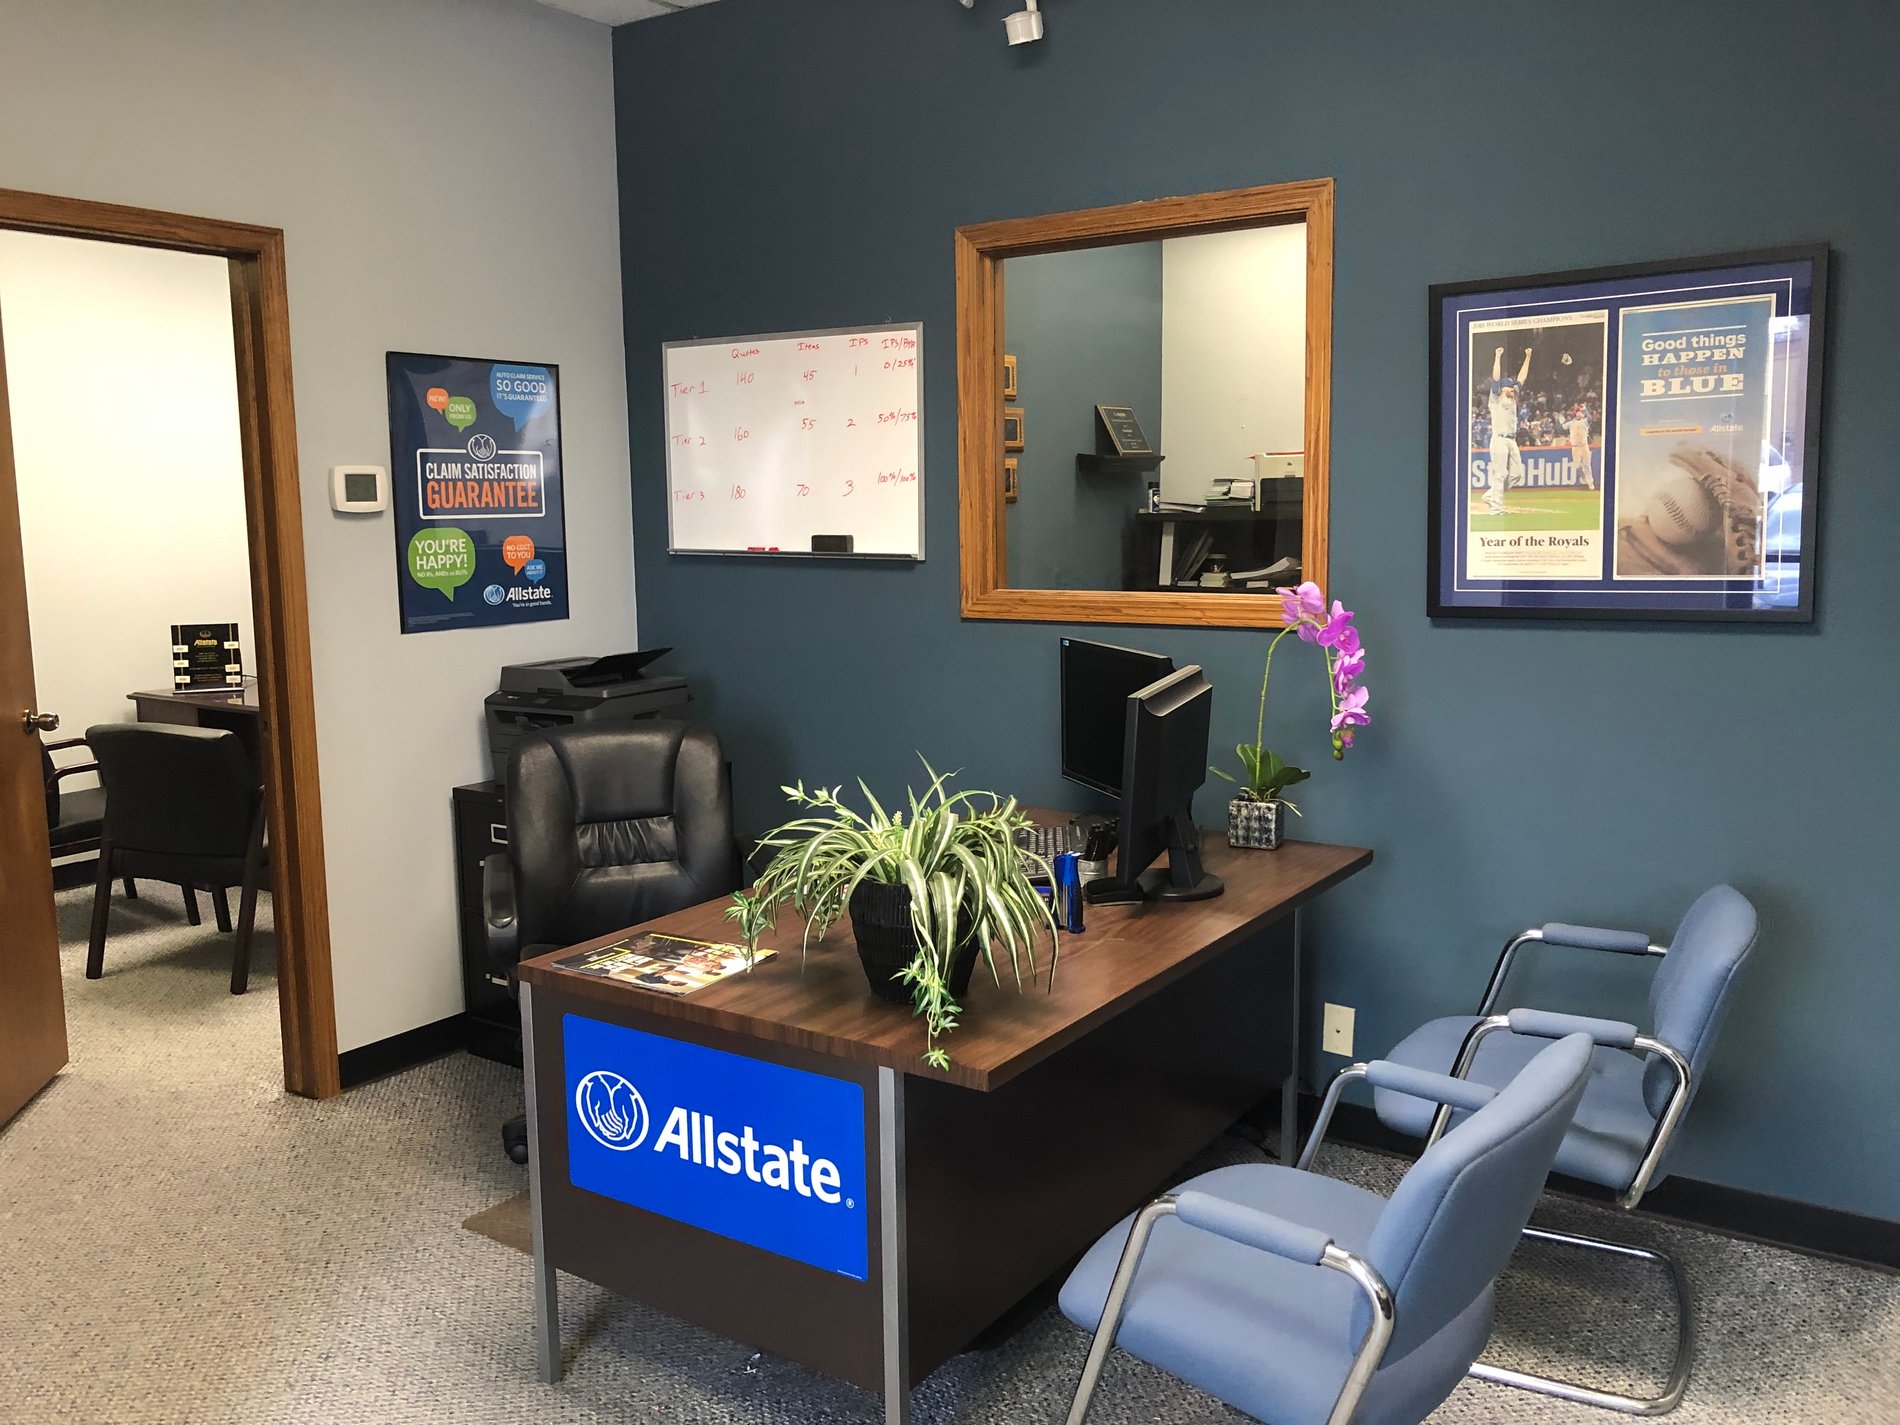 Allstate | Car Insurance in Wichita, KS - Pam Kirtley